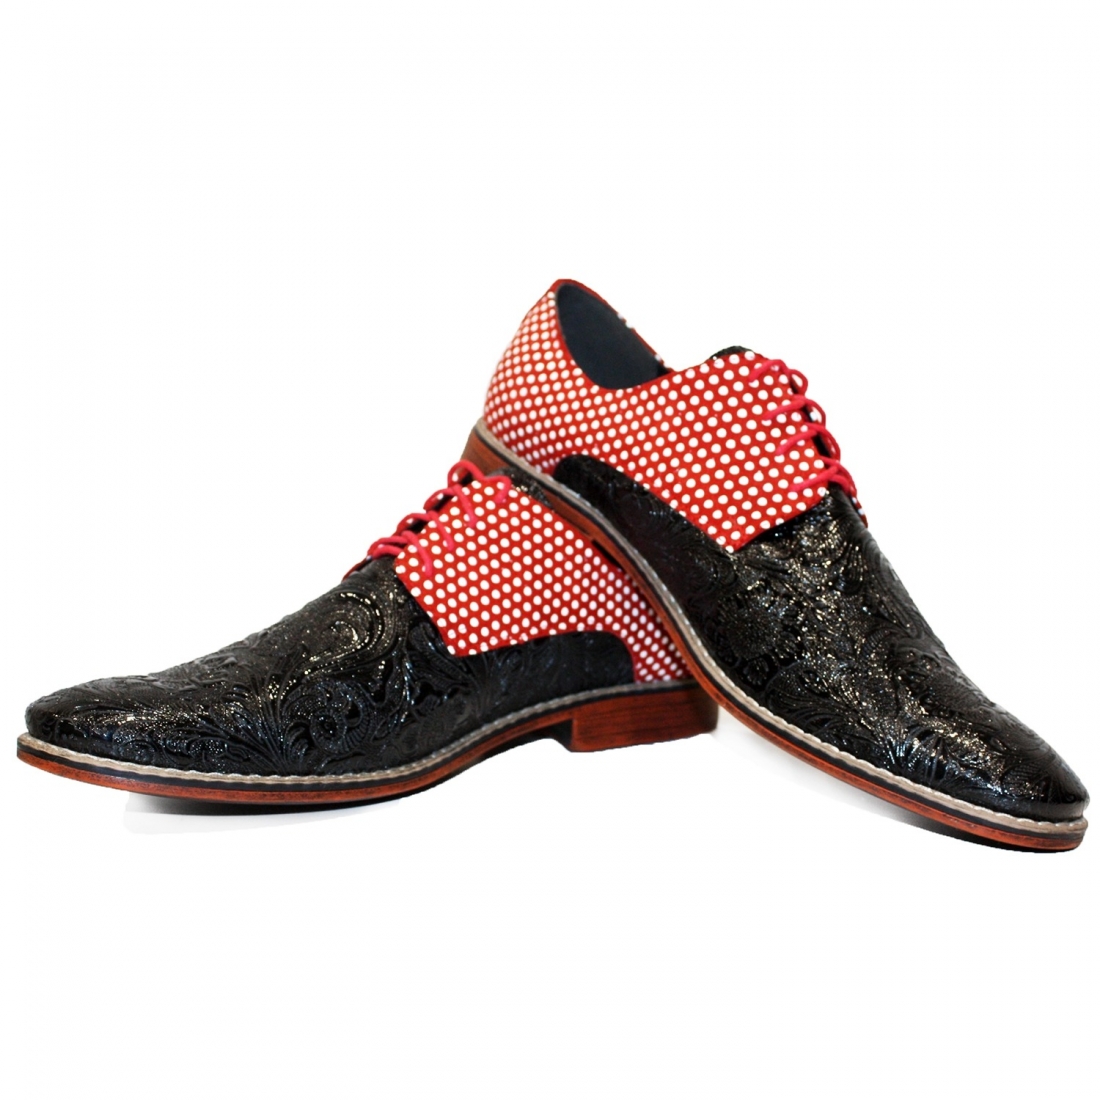 Modello Blinkerro - Chaussure Classique - Handmade Colorful Italian Leather Shoes